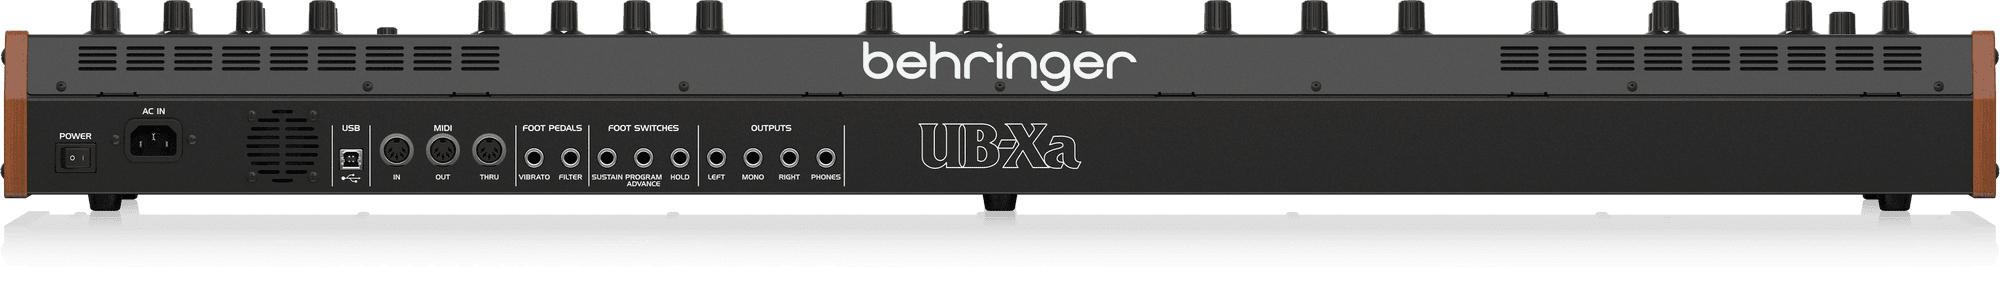 behringer ub-xa synthesizer rear